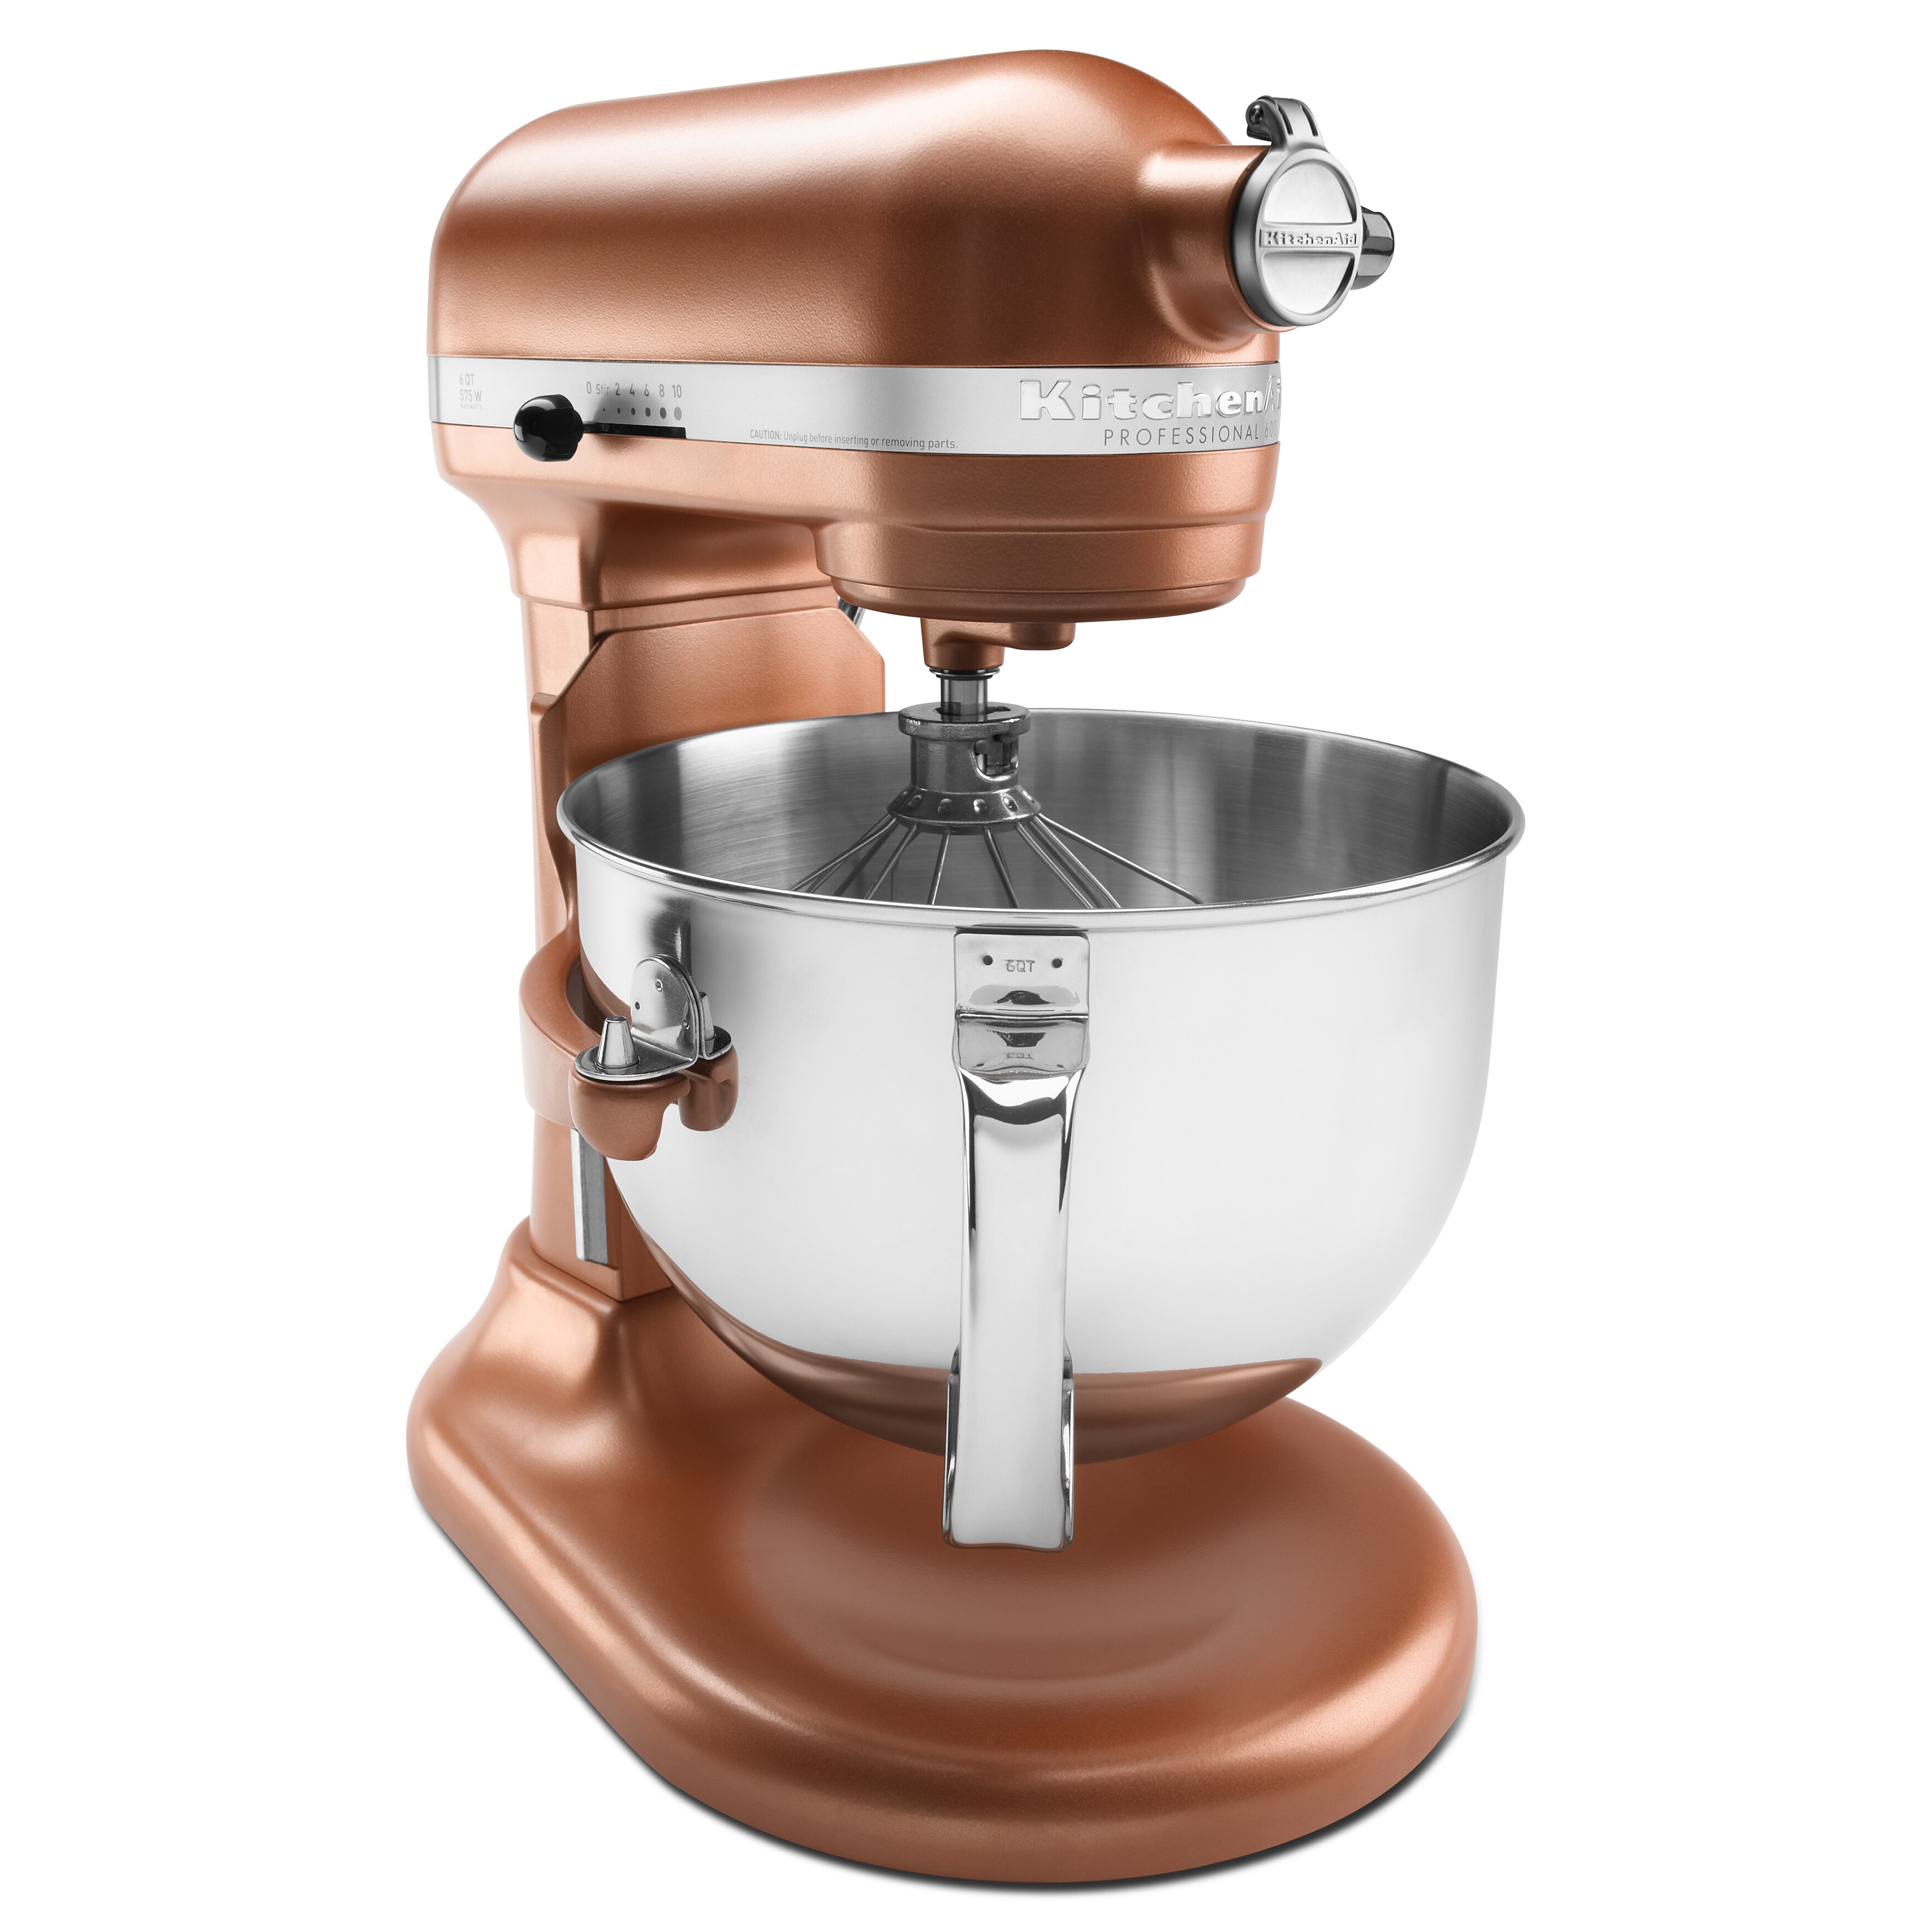 Home: KitchenAid Copper 5-Qt Stand mixer $199 (Orig. $400